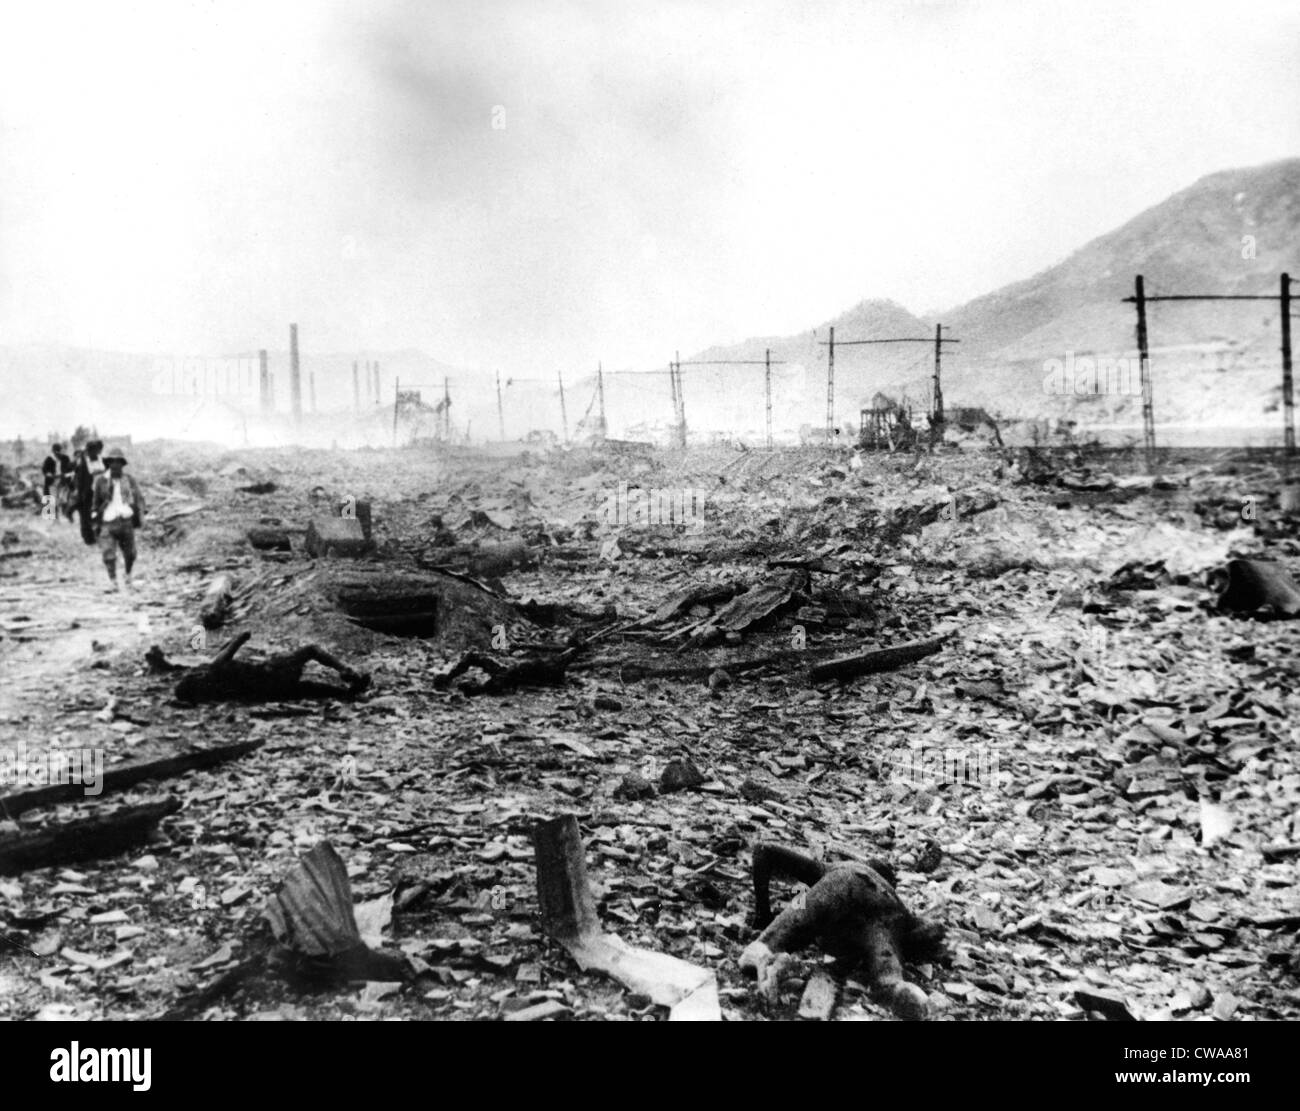 World War II, charred bodies laying amongst the destruction from the Atomic Bombing of Nagasaki, Japan, 09/06/45. Courtesy: CSU Stock Photo